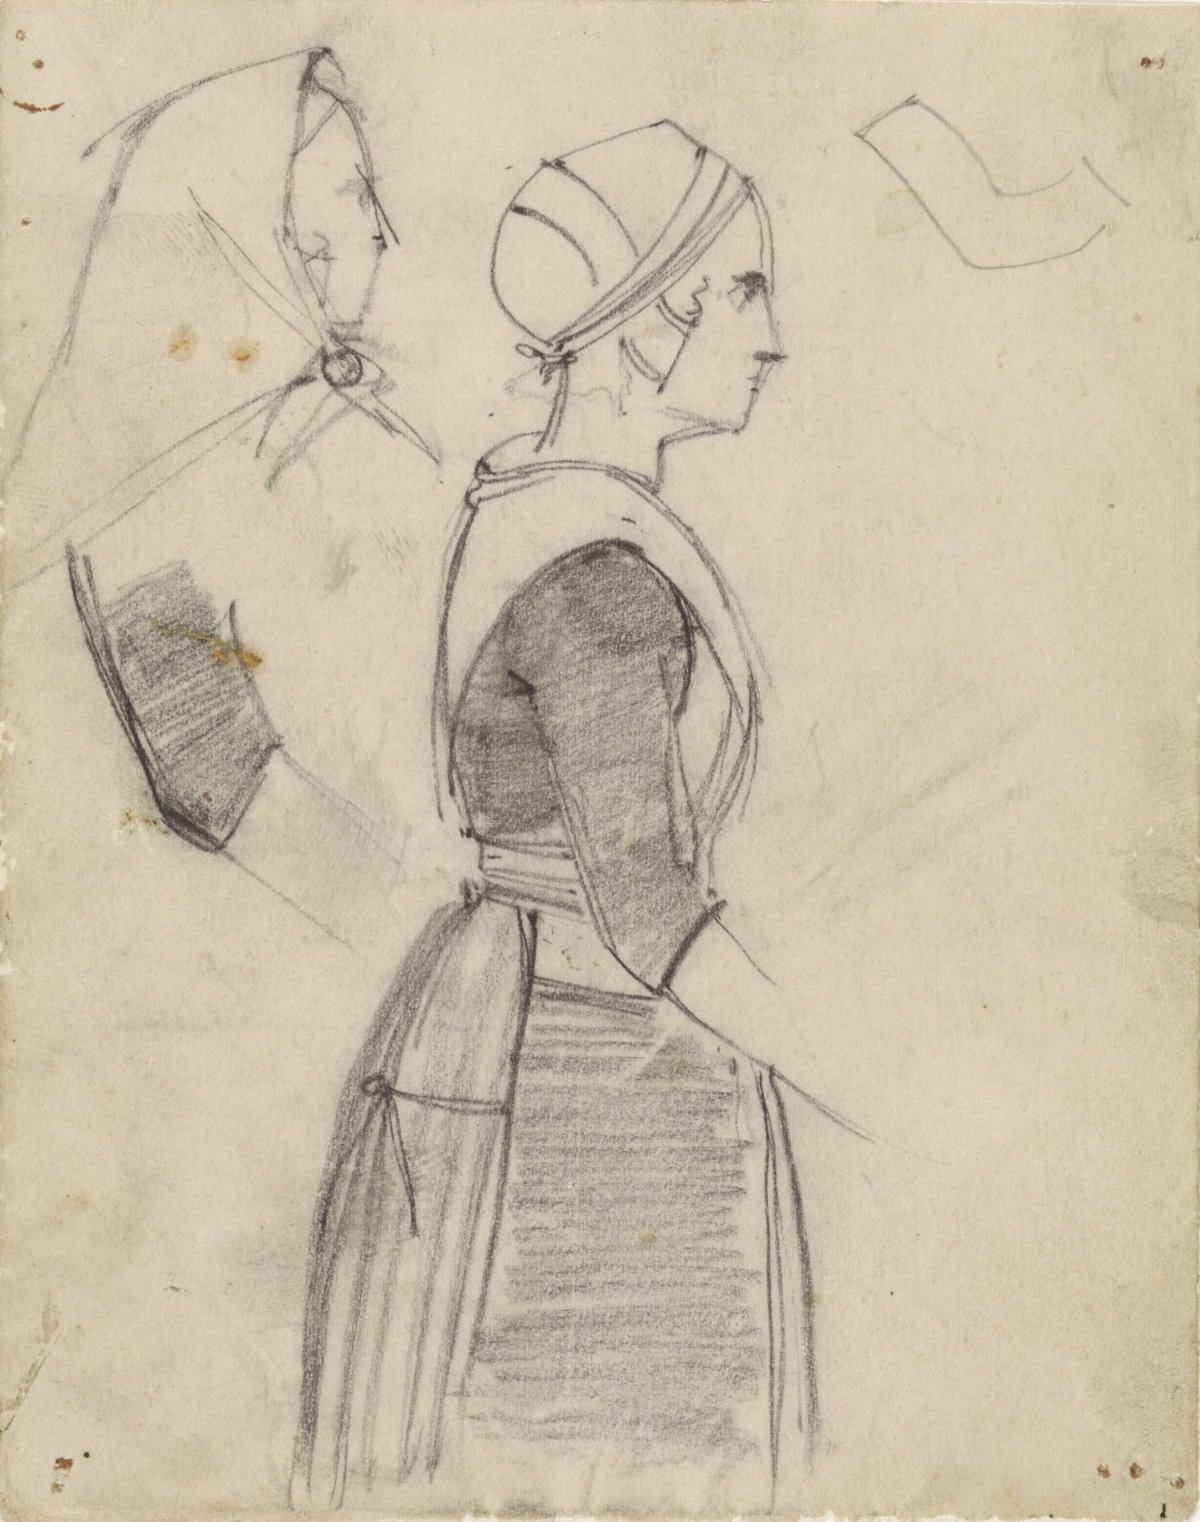 Study of a woman in Spakenburg costume, Gerrit Willem Dijsselhof, 1876 - 1924